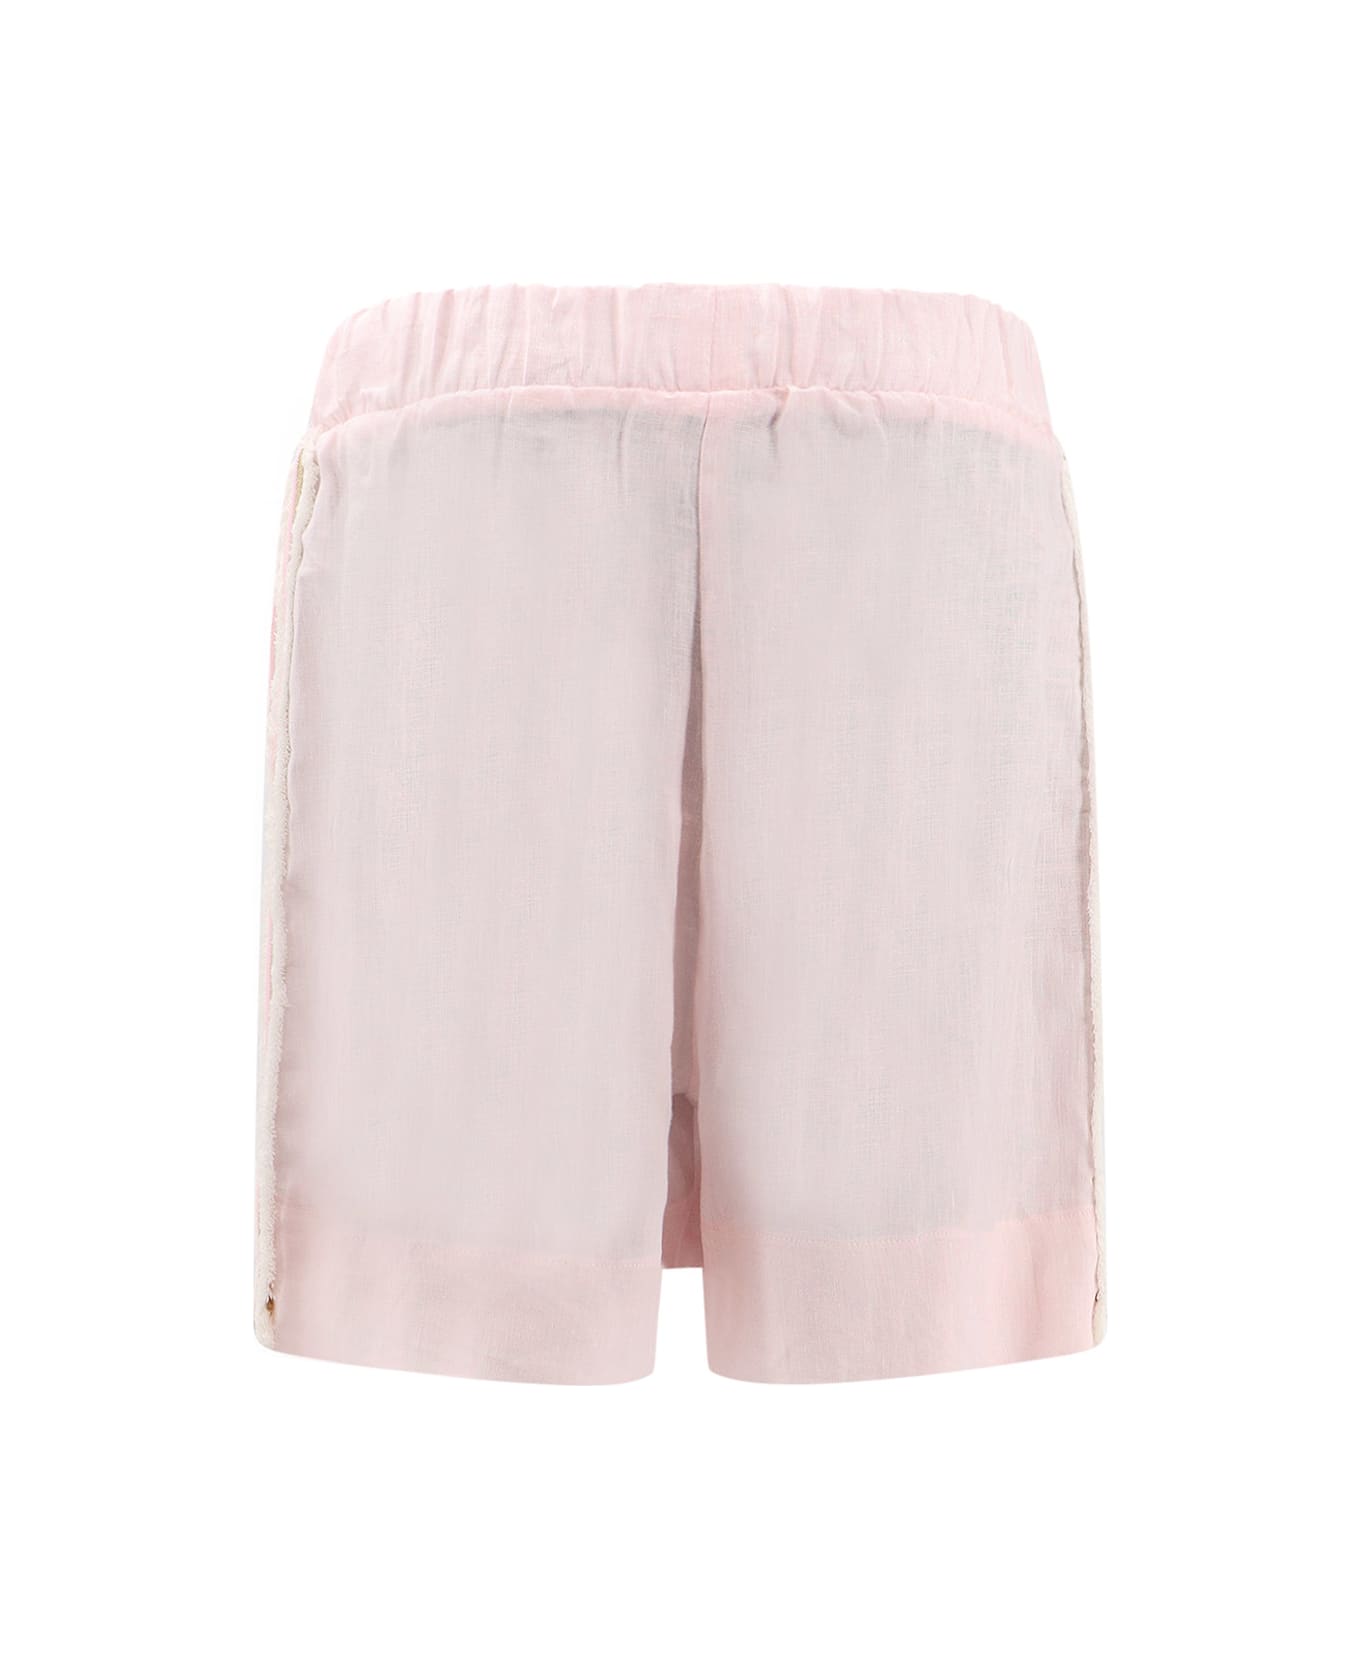 MVP Wardrobe Shorts - Pink ショートパンツ